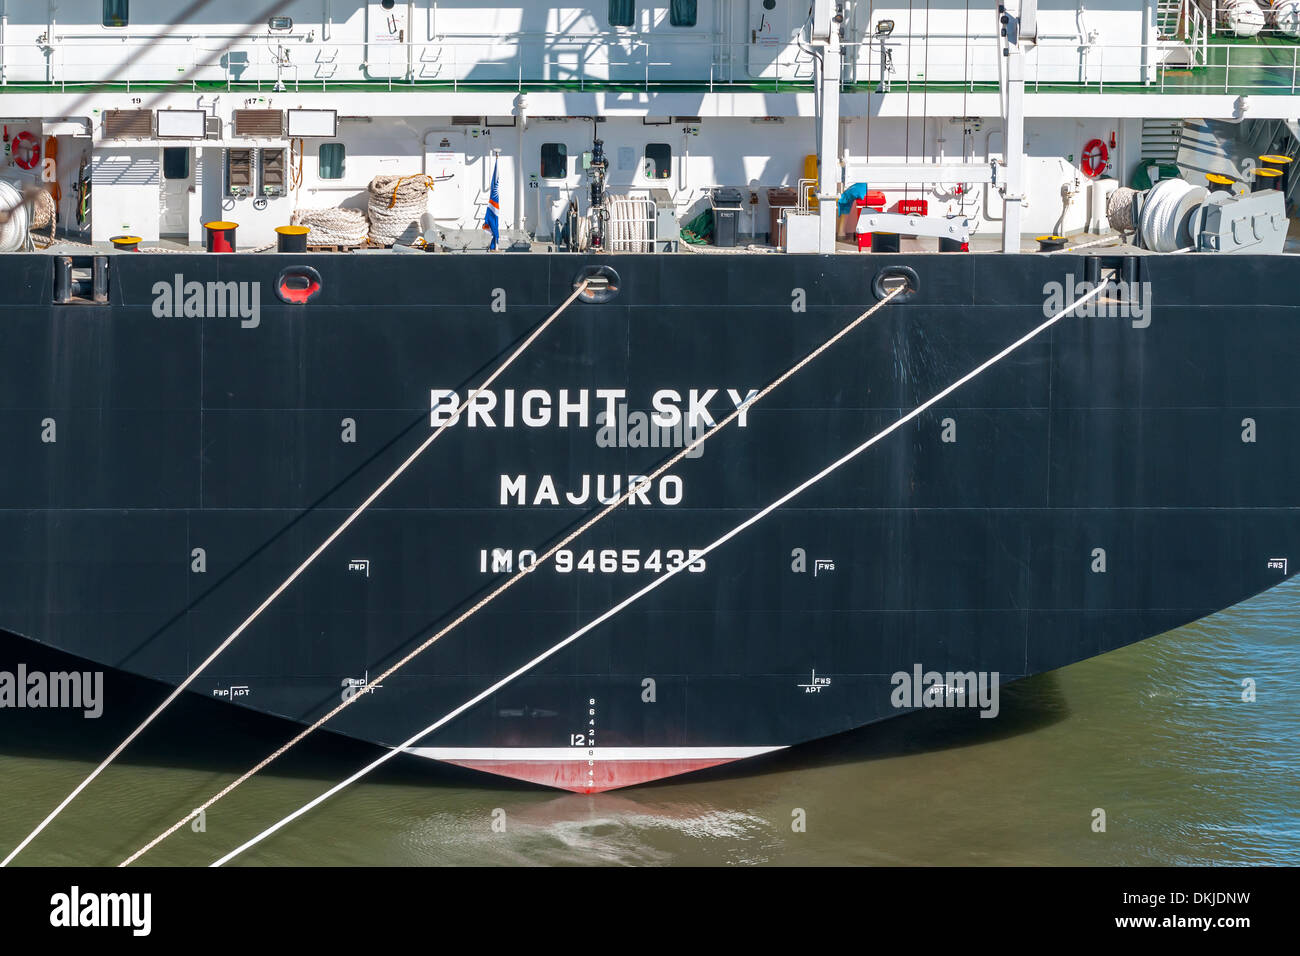 Arc - Navire OMI 9465435 Majuro Bright Sky Banque D'Images